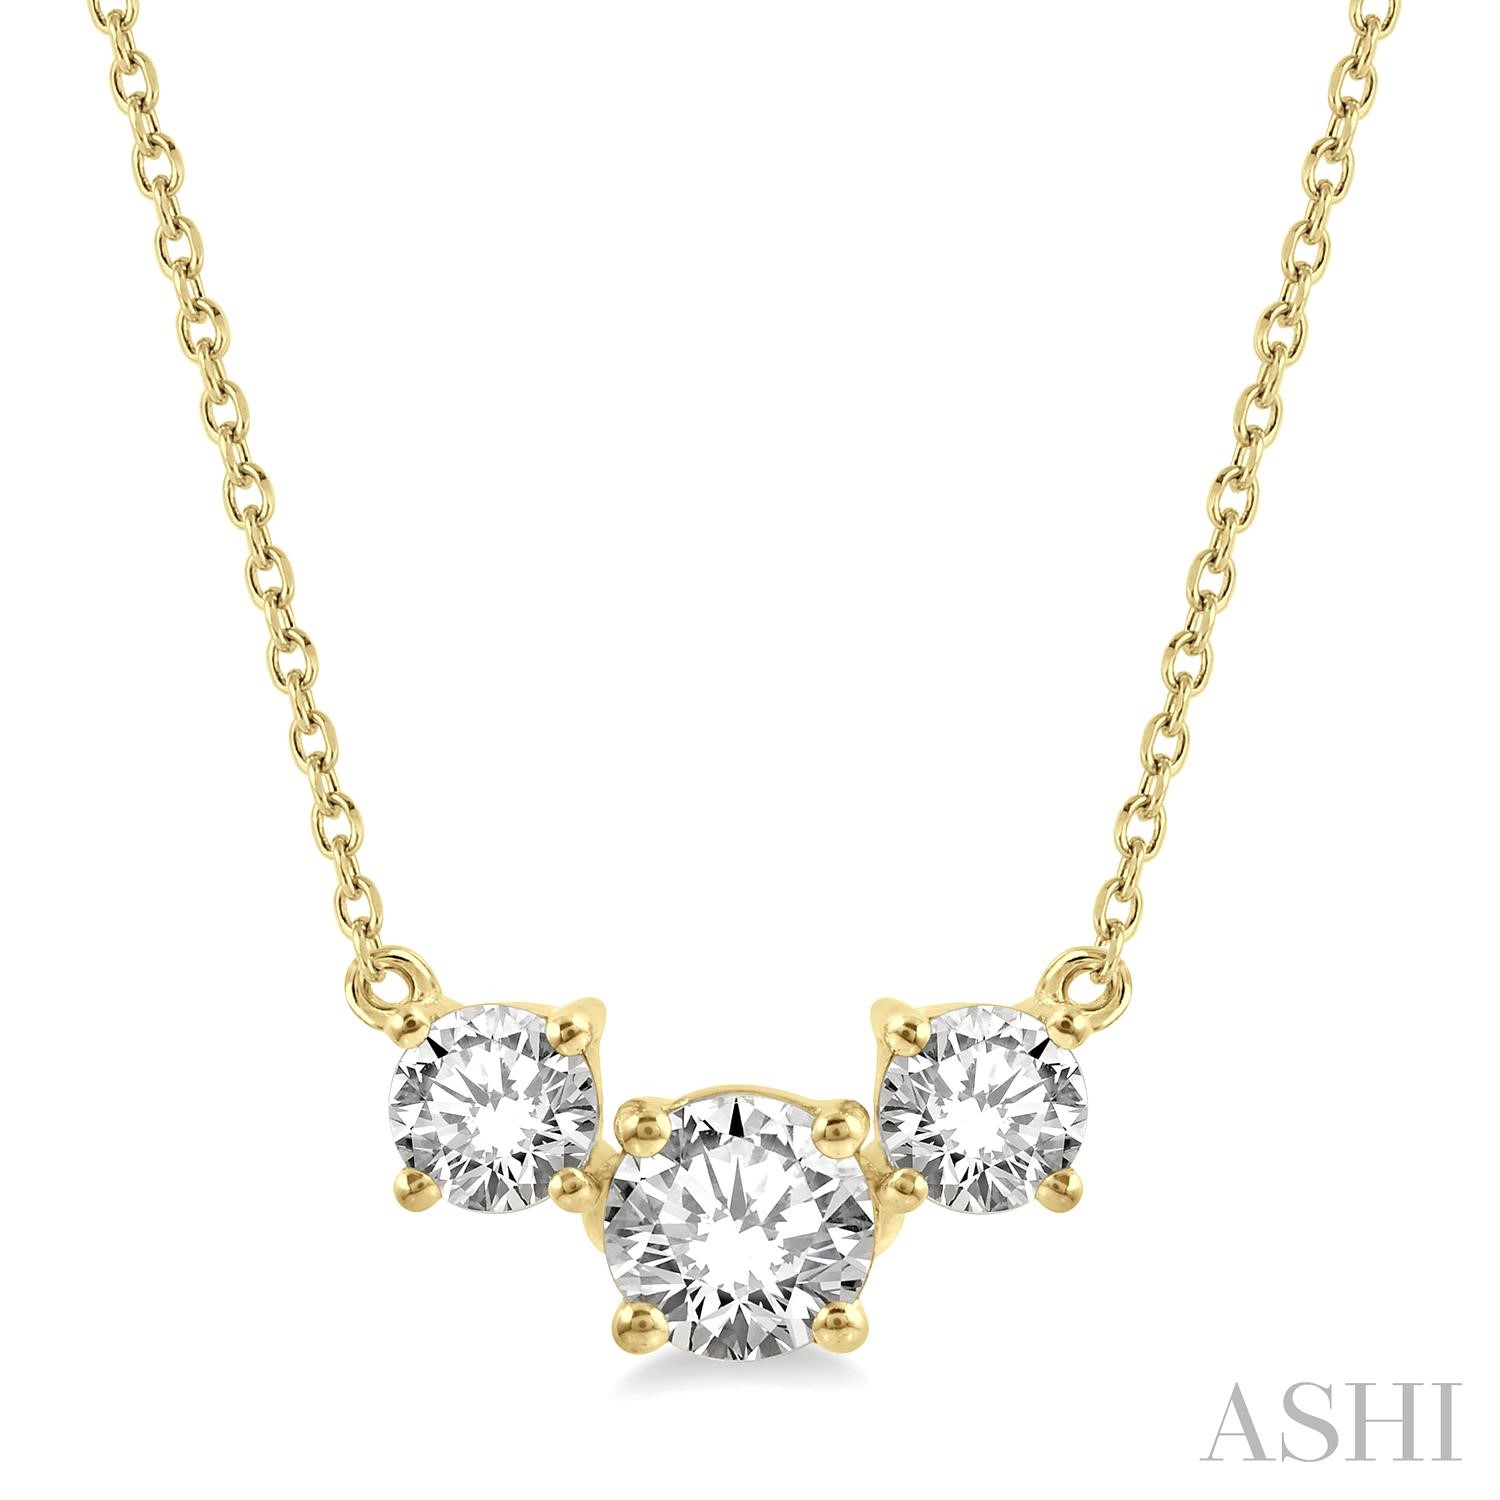 14 Karat Yellow Gold 3 Stone Diamond Necklace 0.75CTW
18 Inch Chain